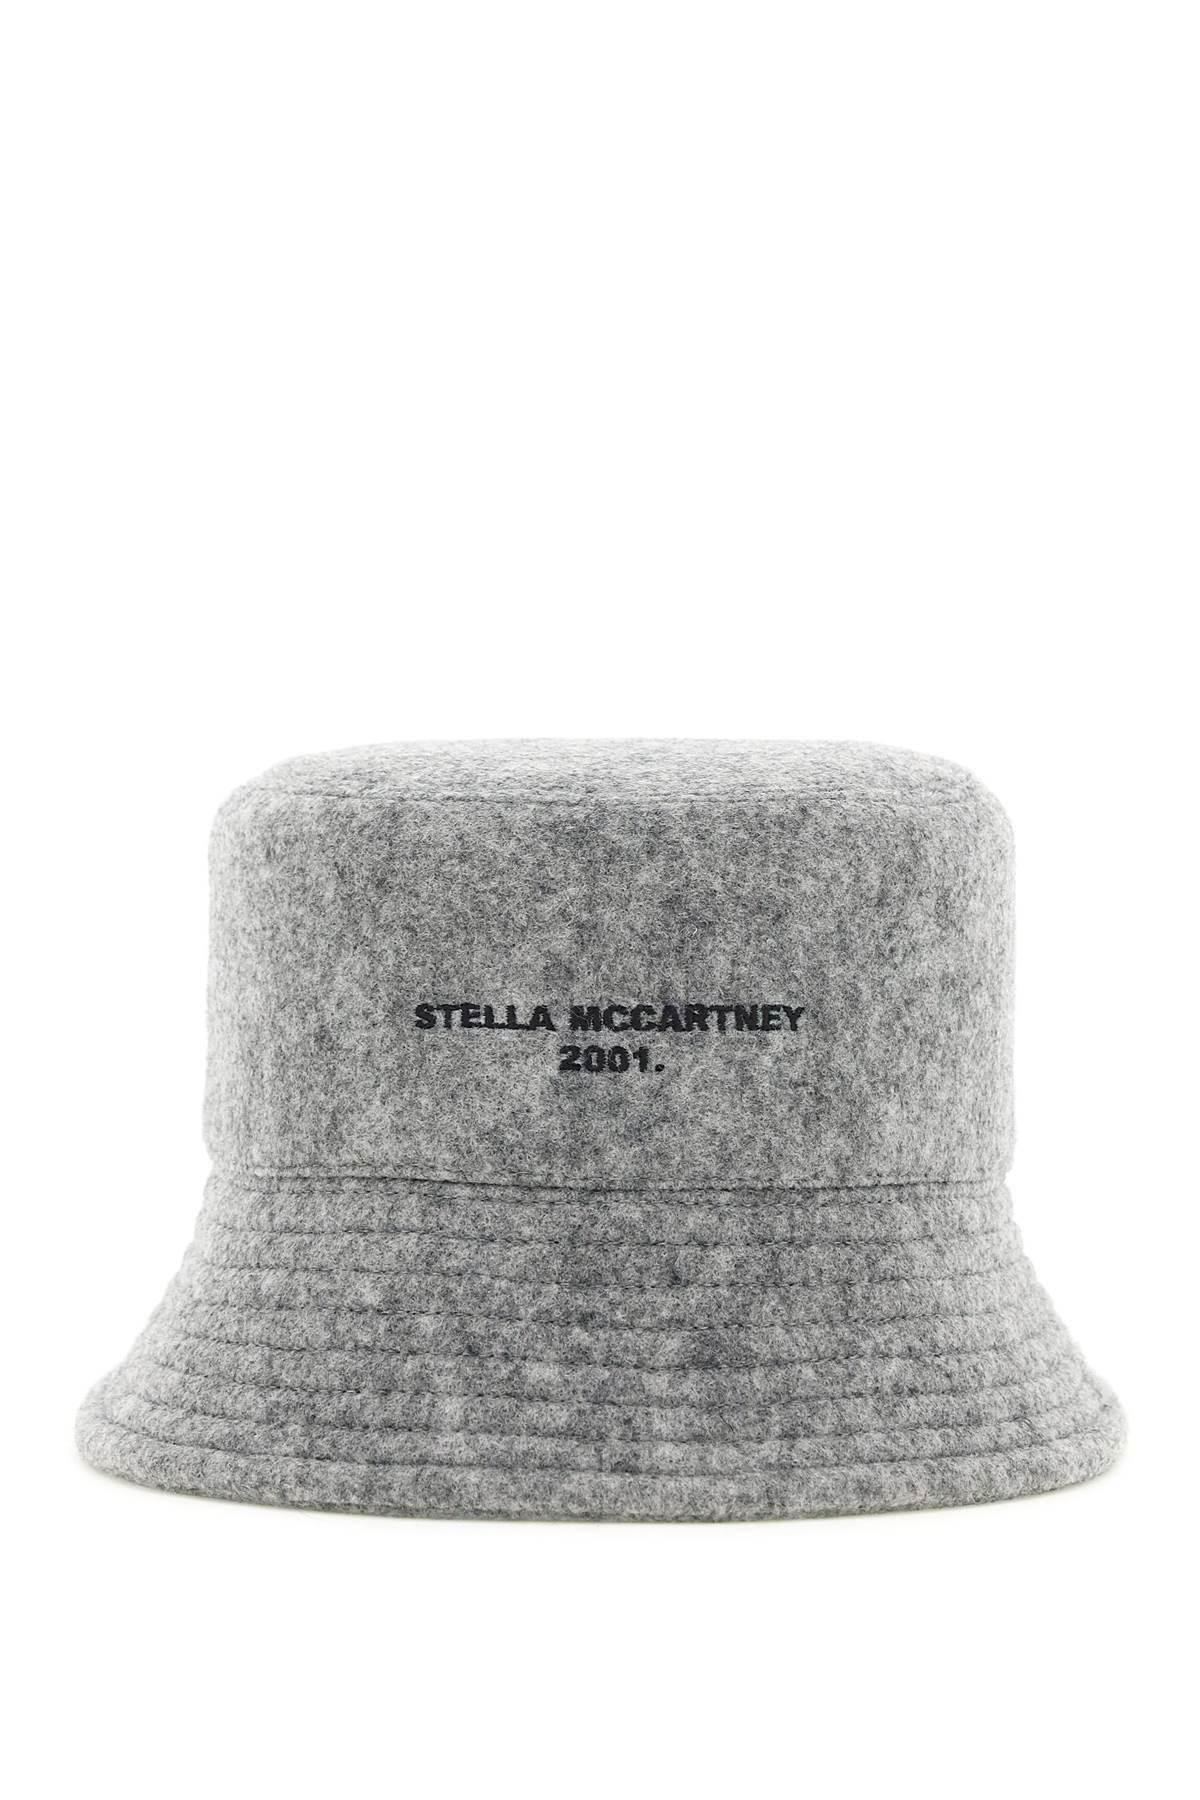 Stella McCartney Tella Mccartney Felt Bucket Hat in Gray | Lyst